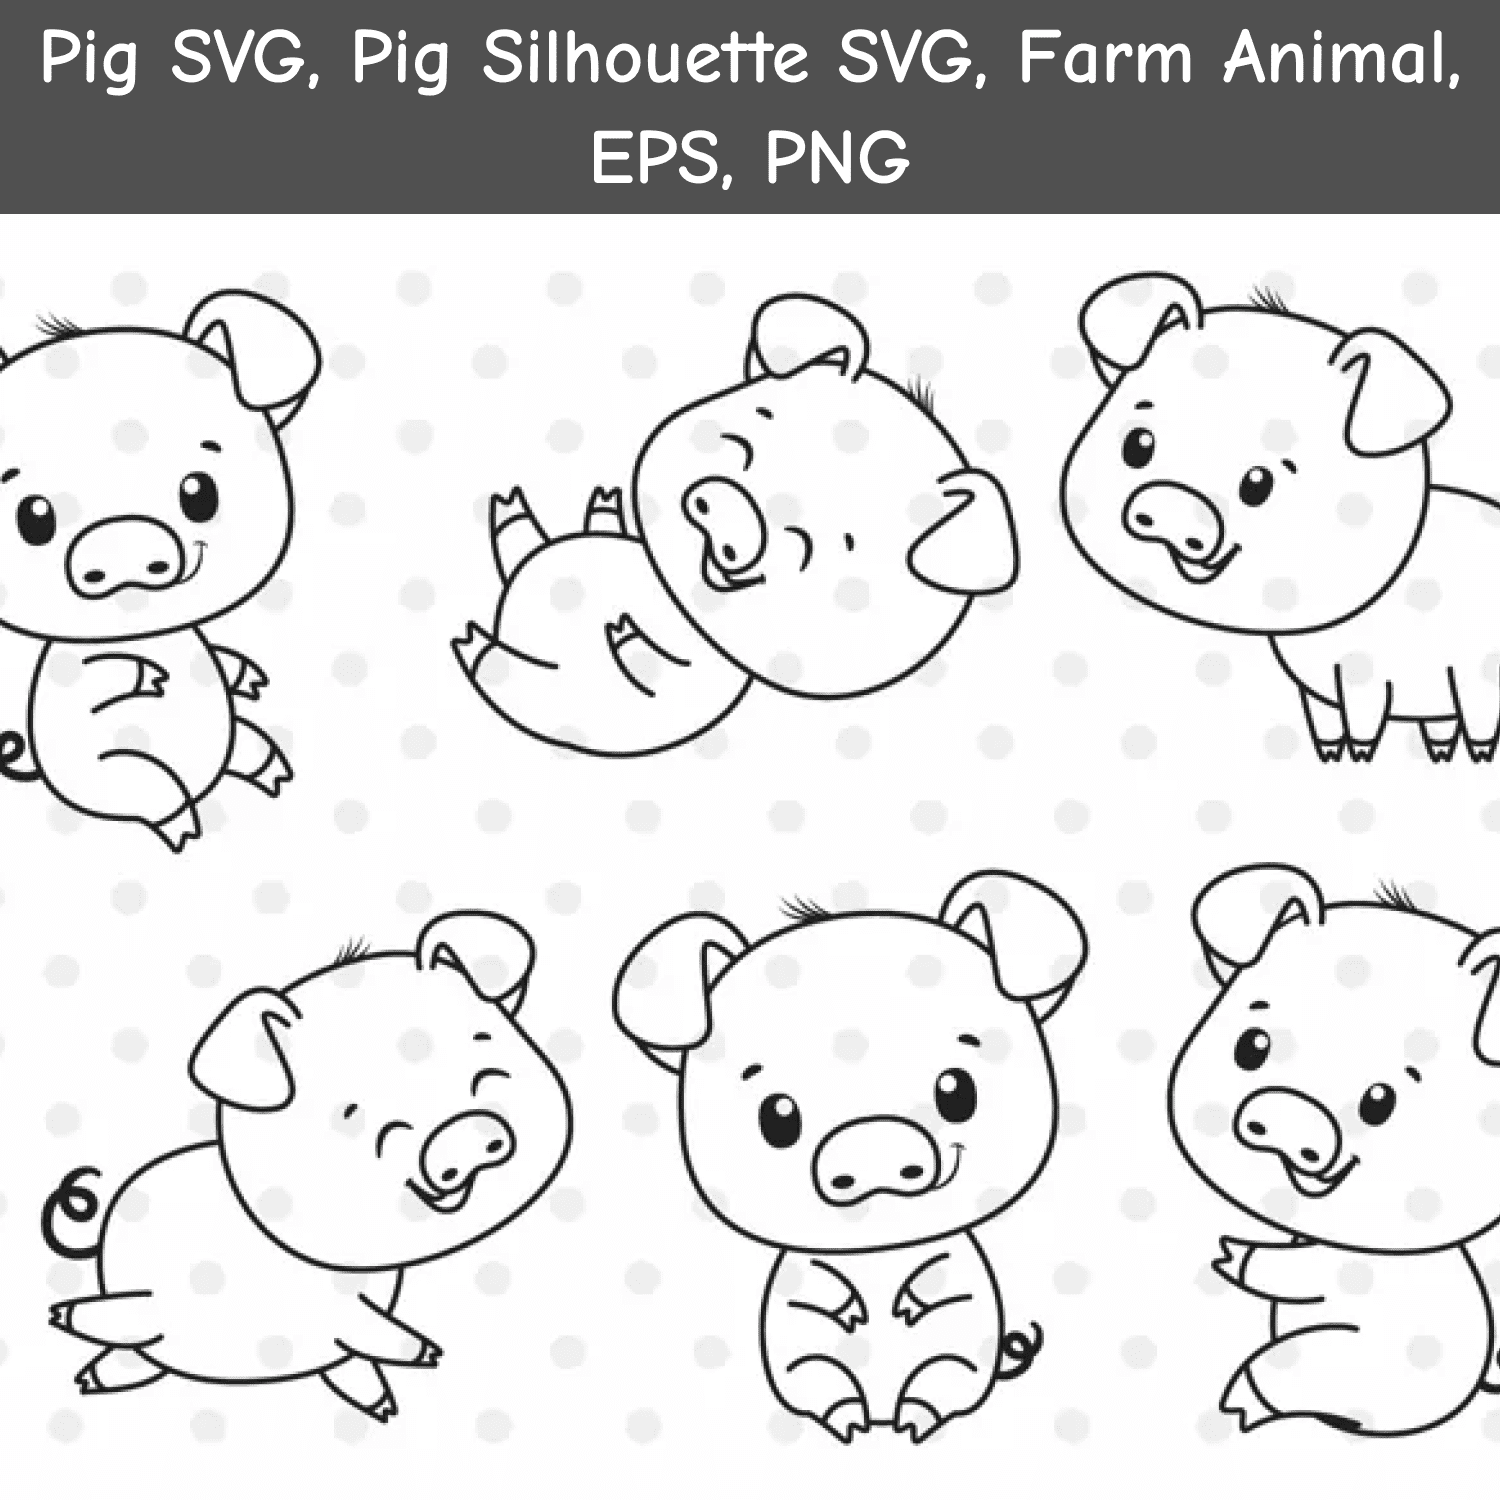 Pig SVG, Pig Silhouette SVG, Farm Animal, EPS, PNG.